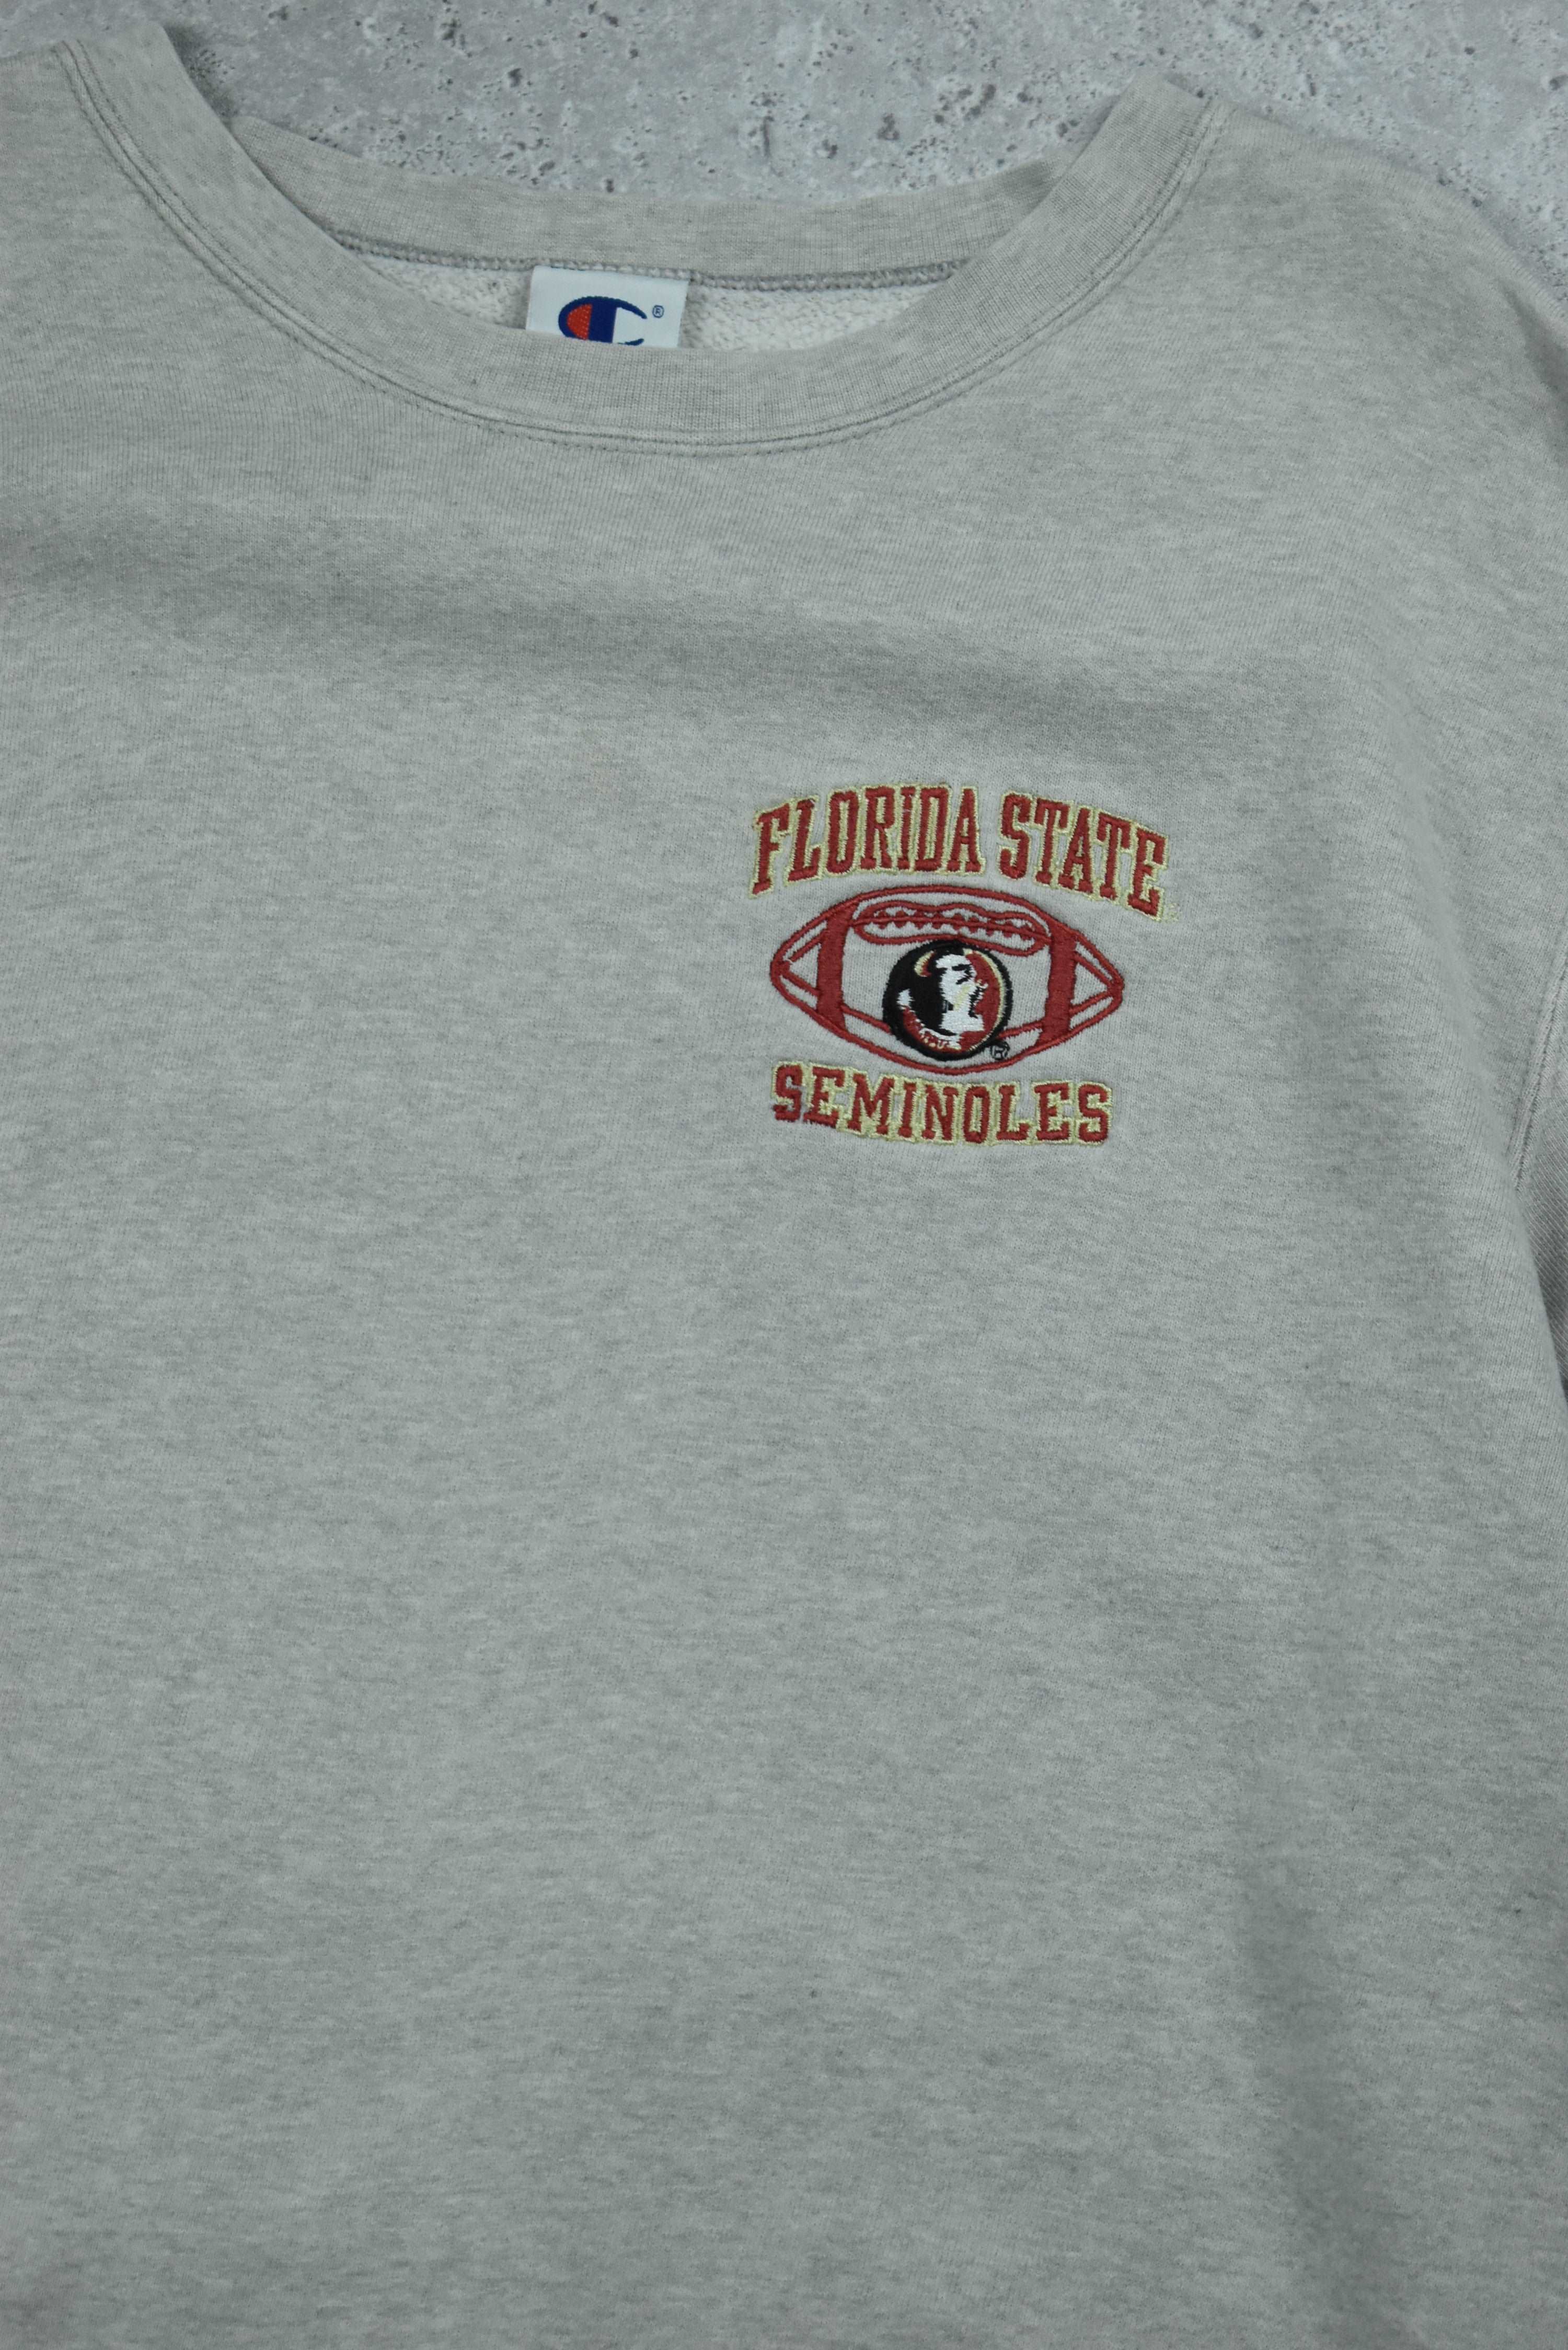 Vintage Champion Florida State Embroidery Sweatshirt Large